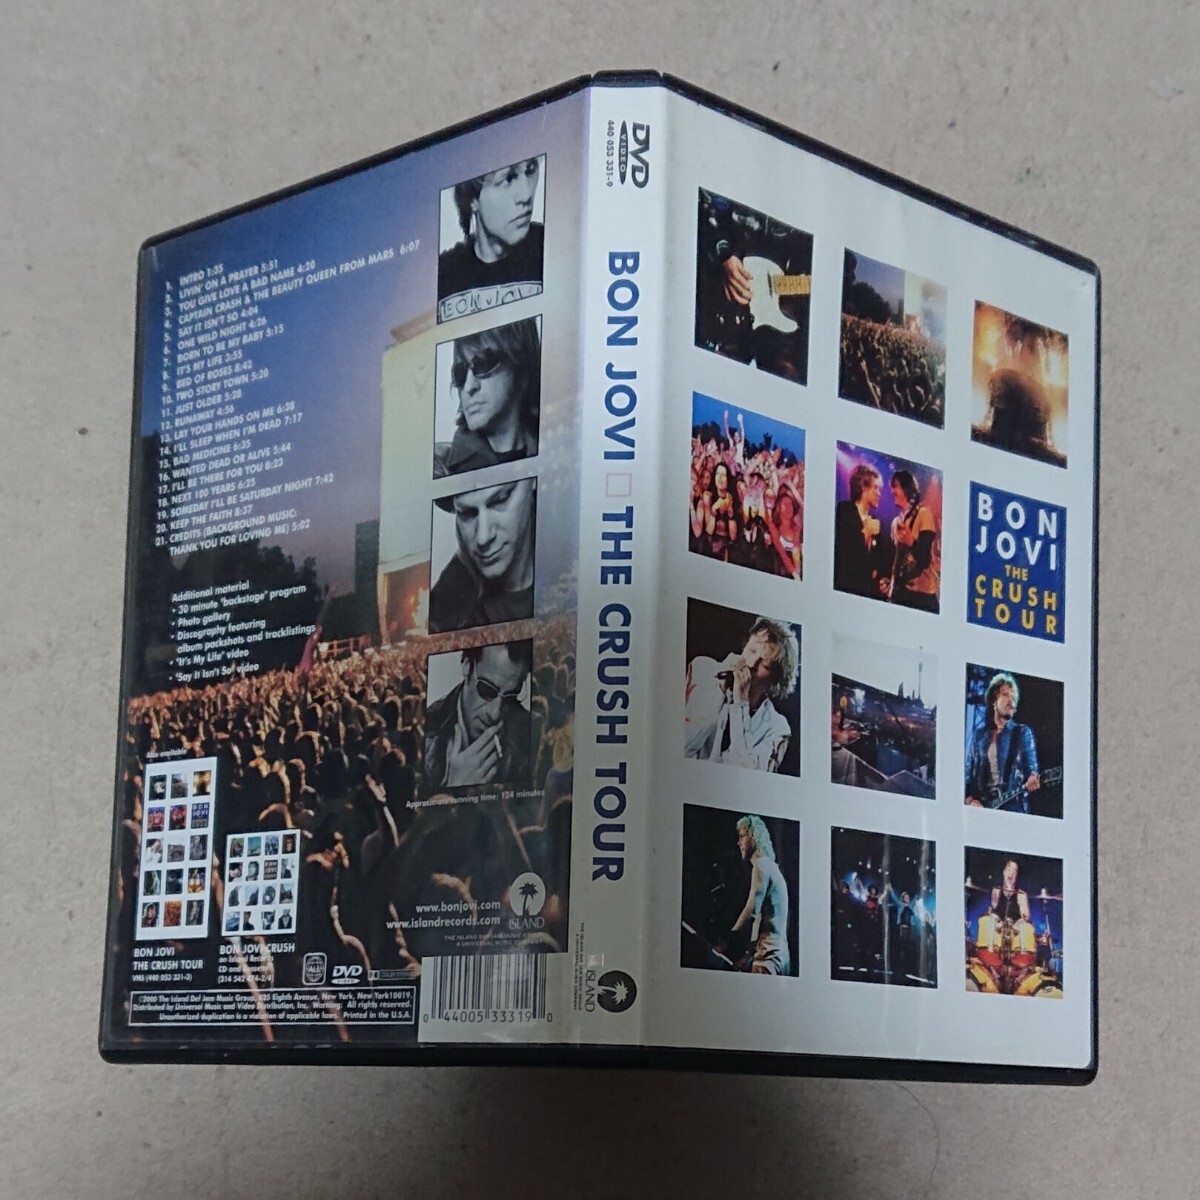 【DVD】ボン・ジョビ Bon Jovi/The Crush Tour_画像4